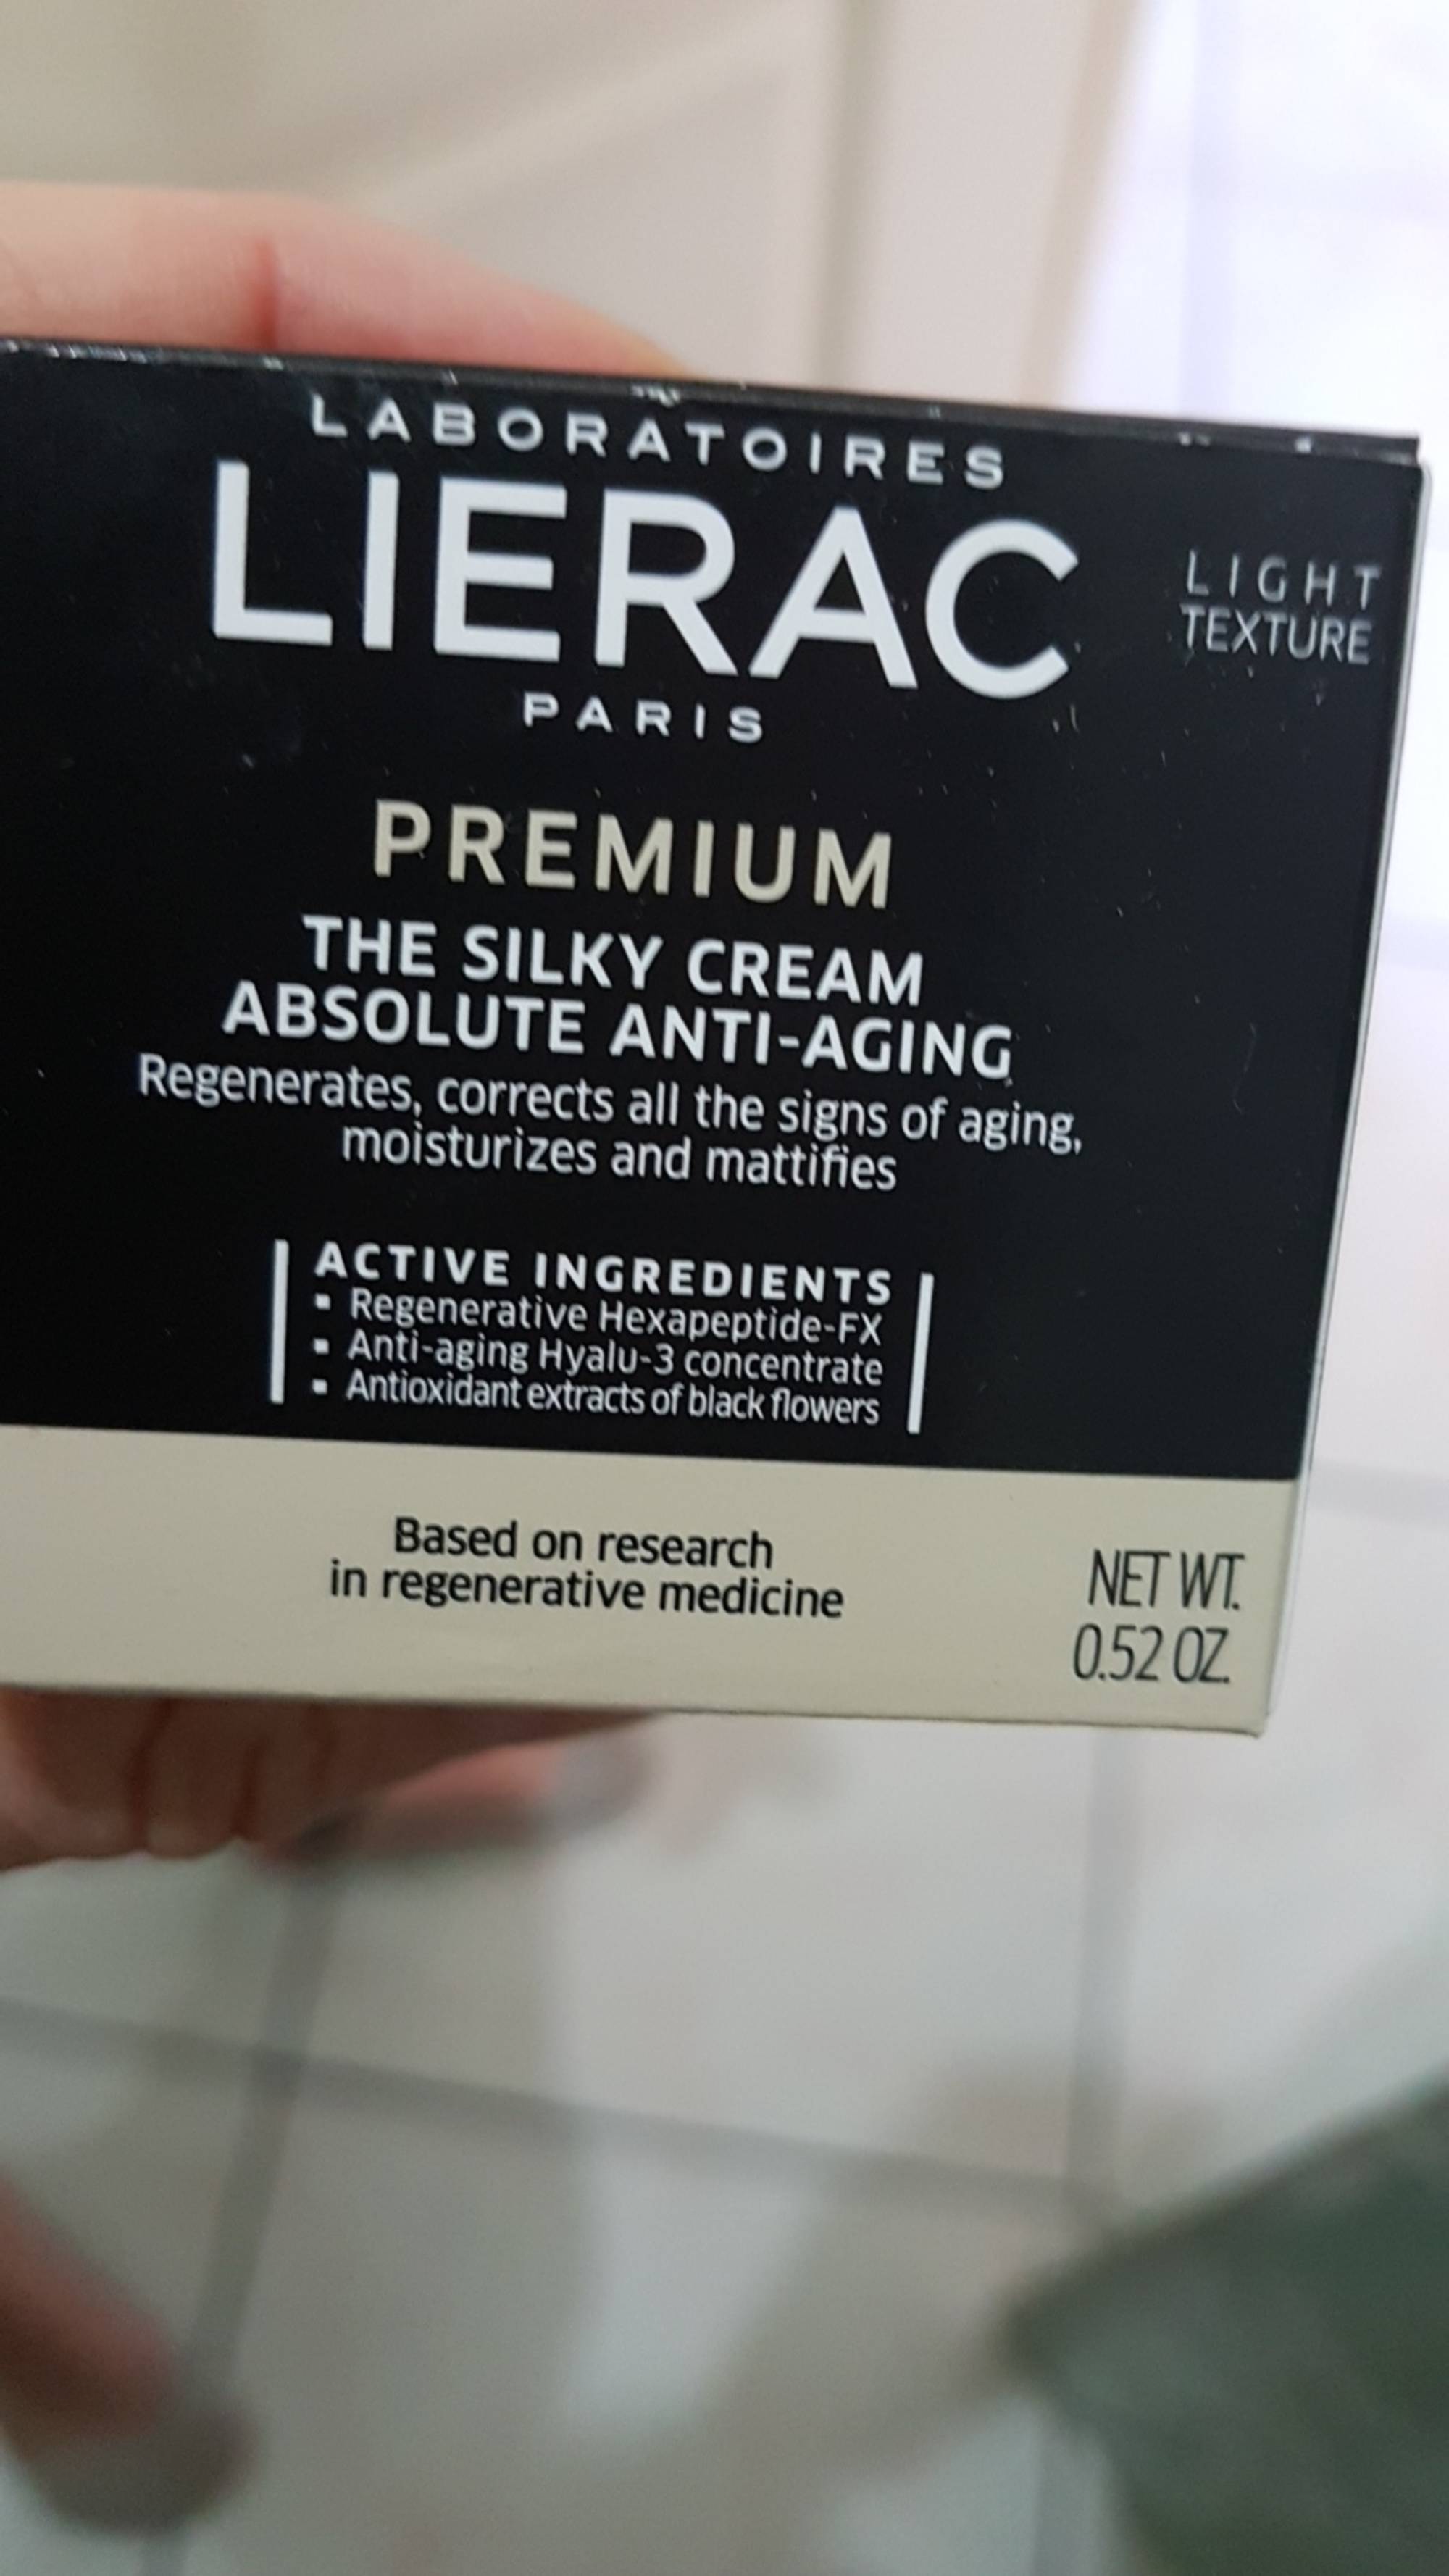 LIÉRAC - Premium - The silky cream absolute anti-aging